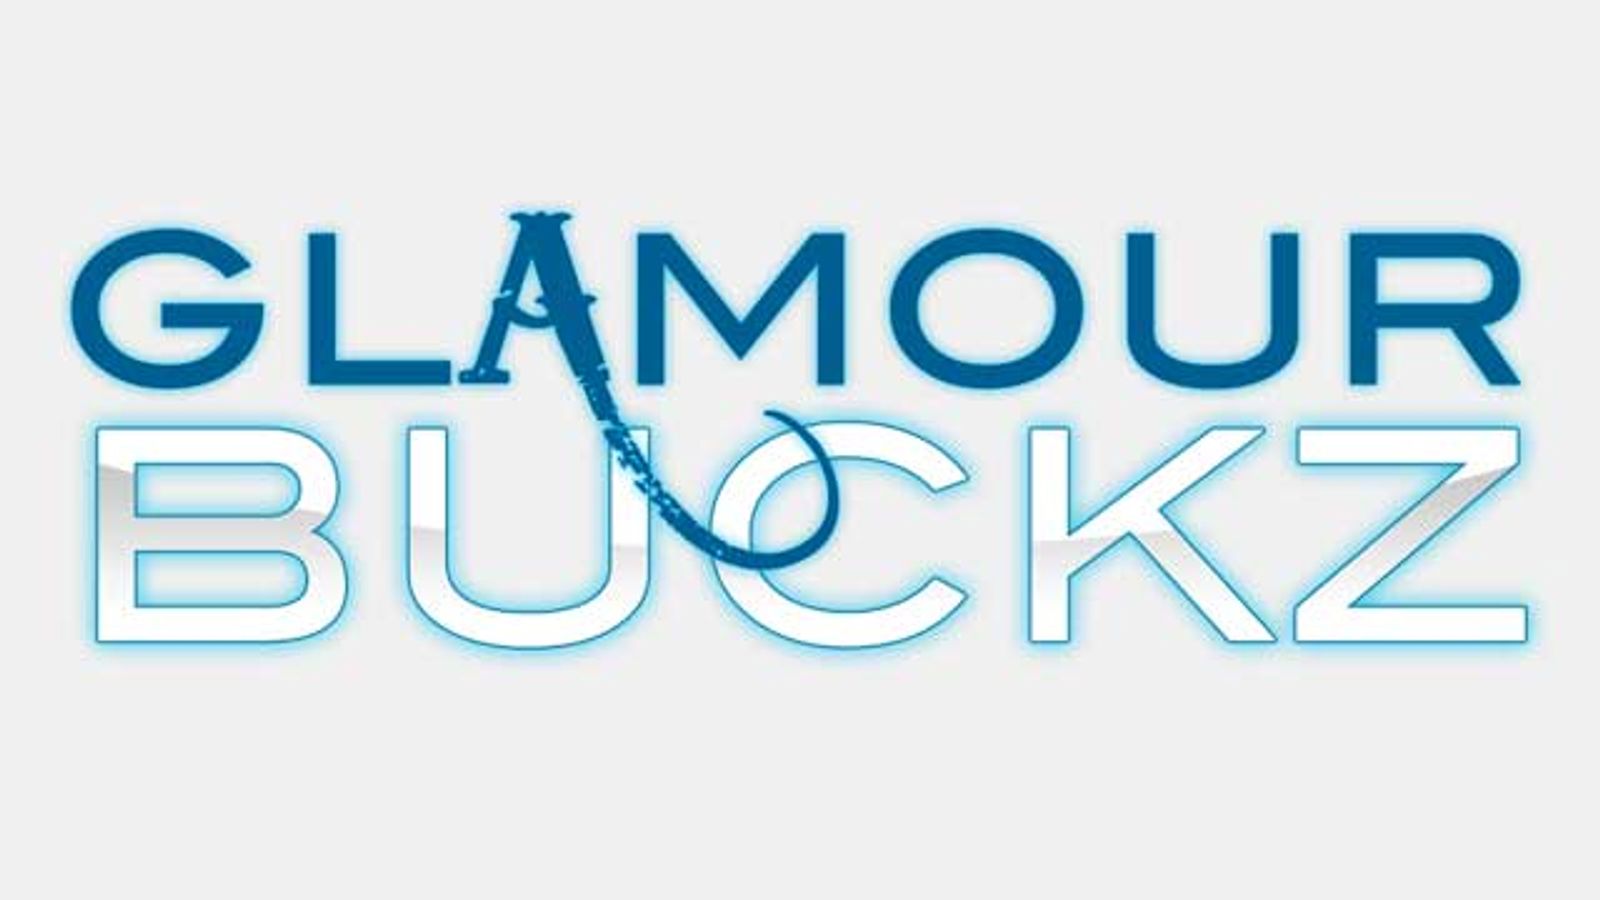 GlamourBuckz Signs Alexa Grace, Launches New Website